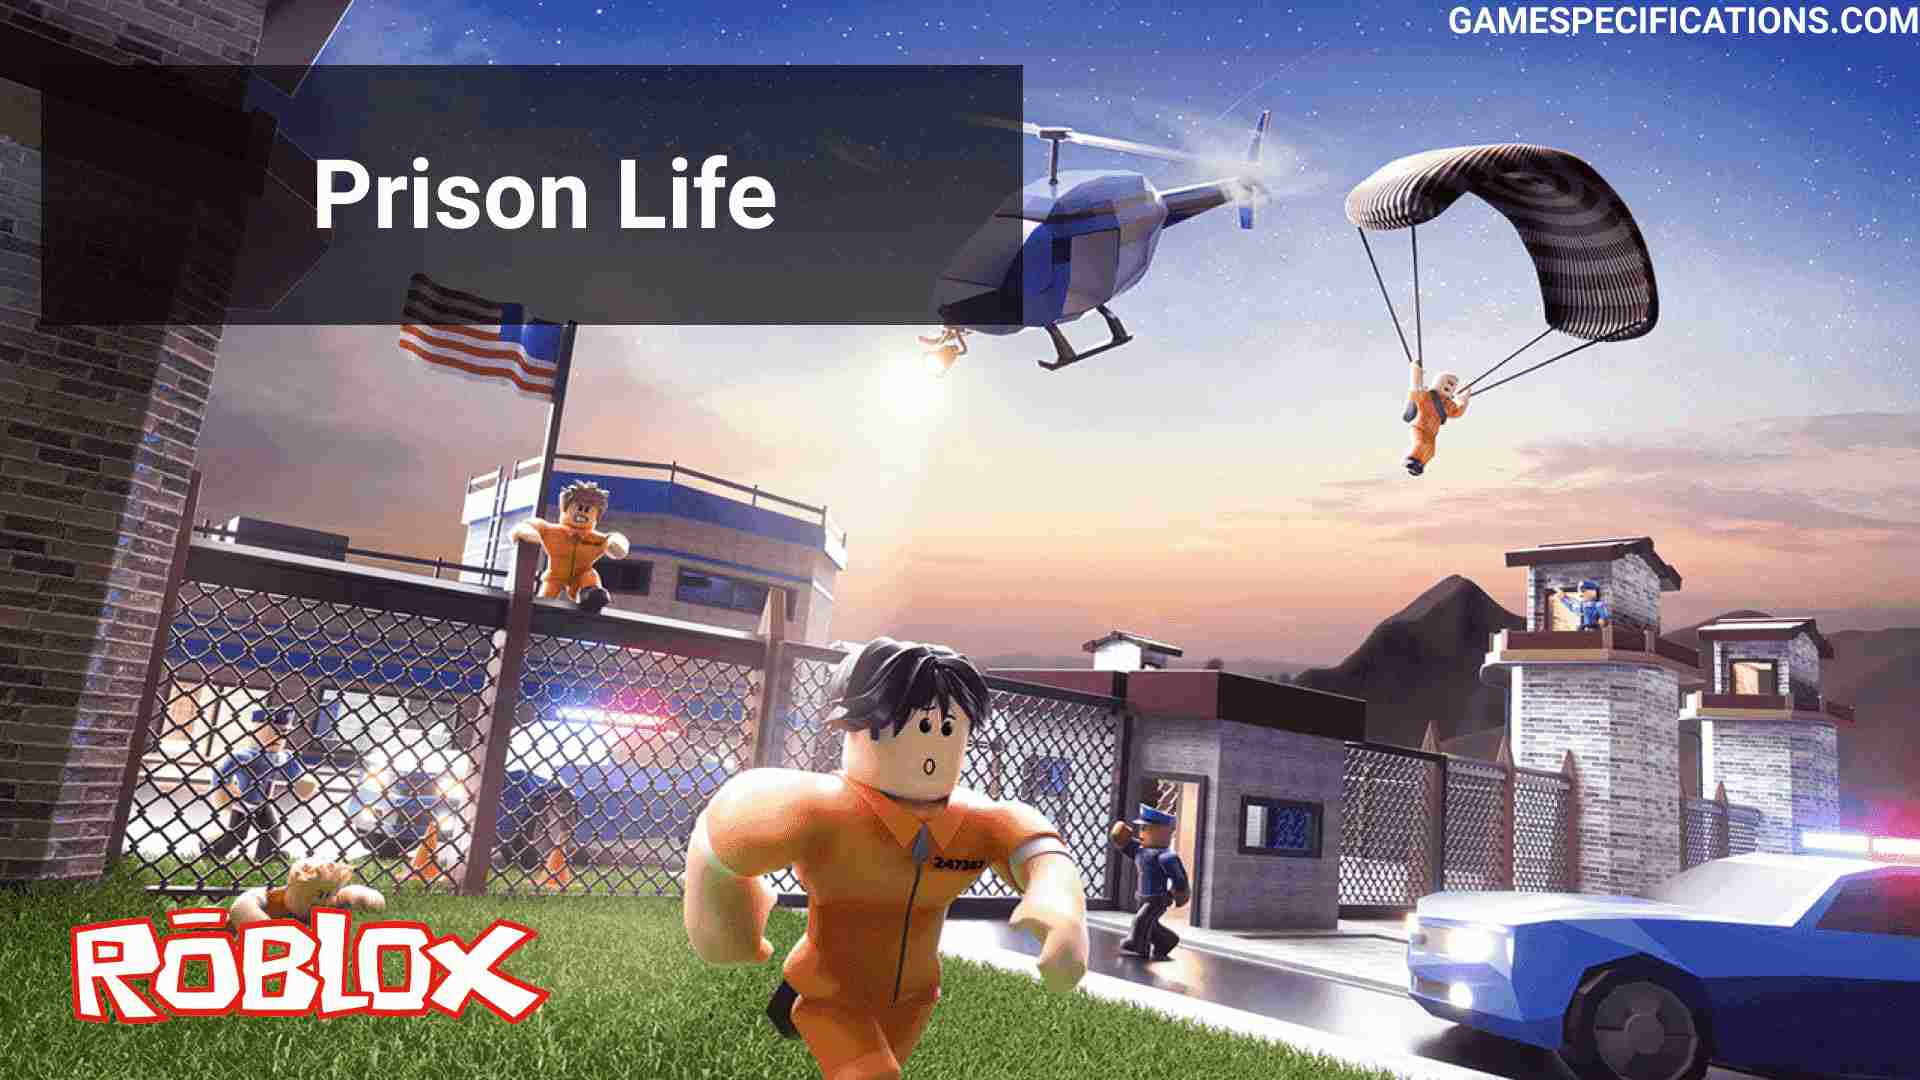 Roblox Prison Life A Complete Guide To Escape Prison 2021 Game Specifications - escape from detention roblox